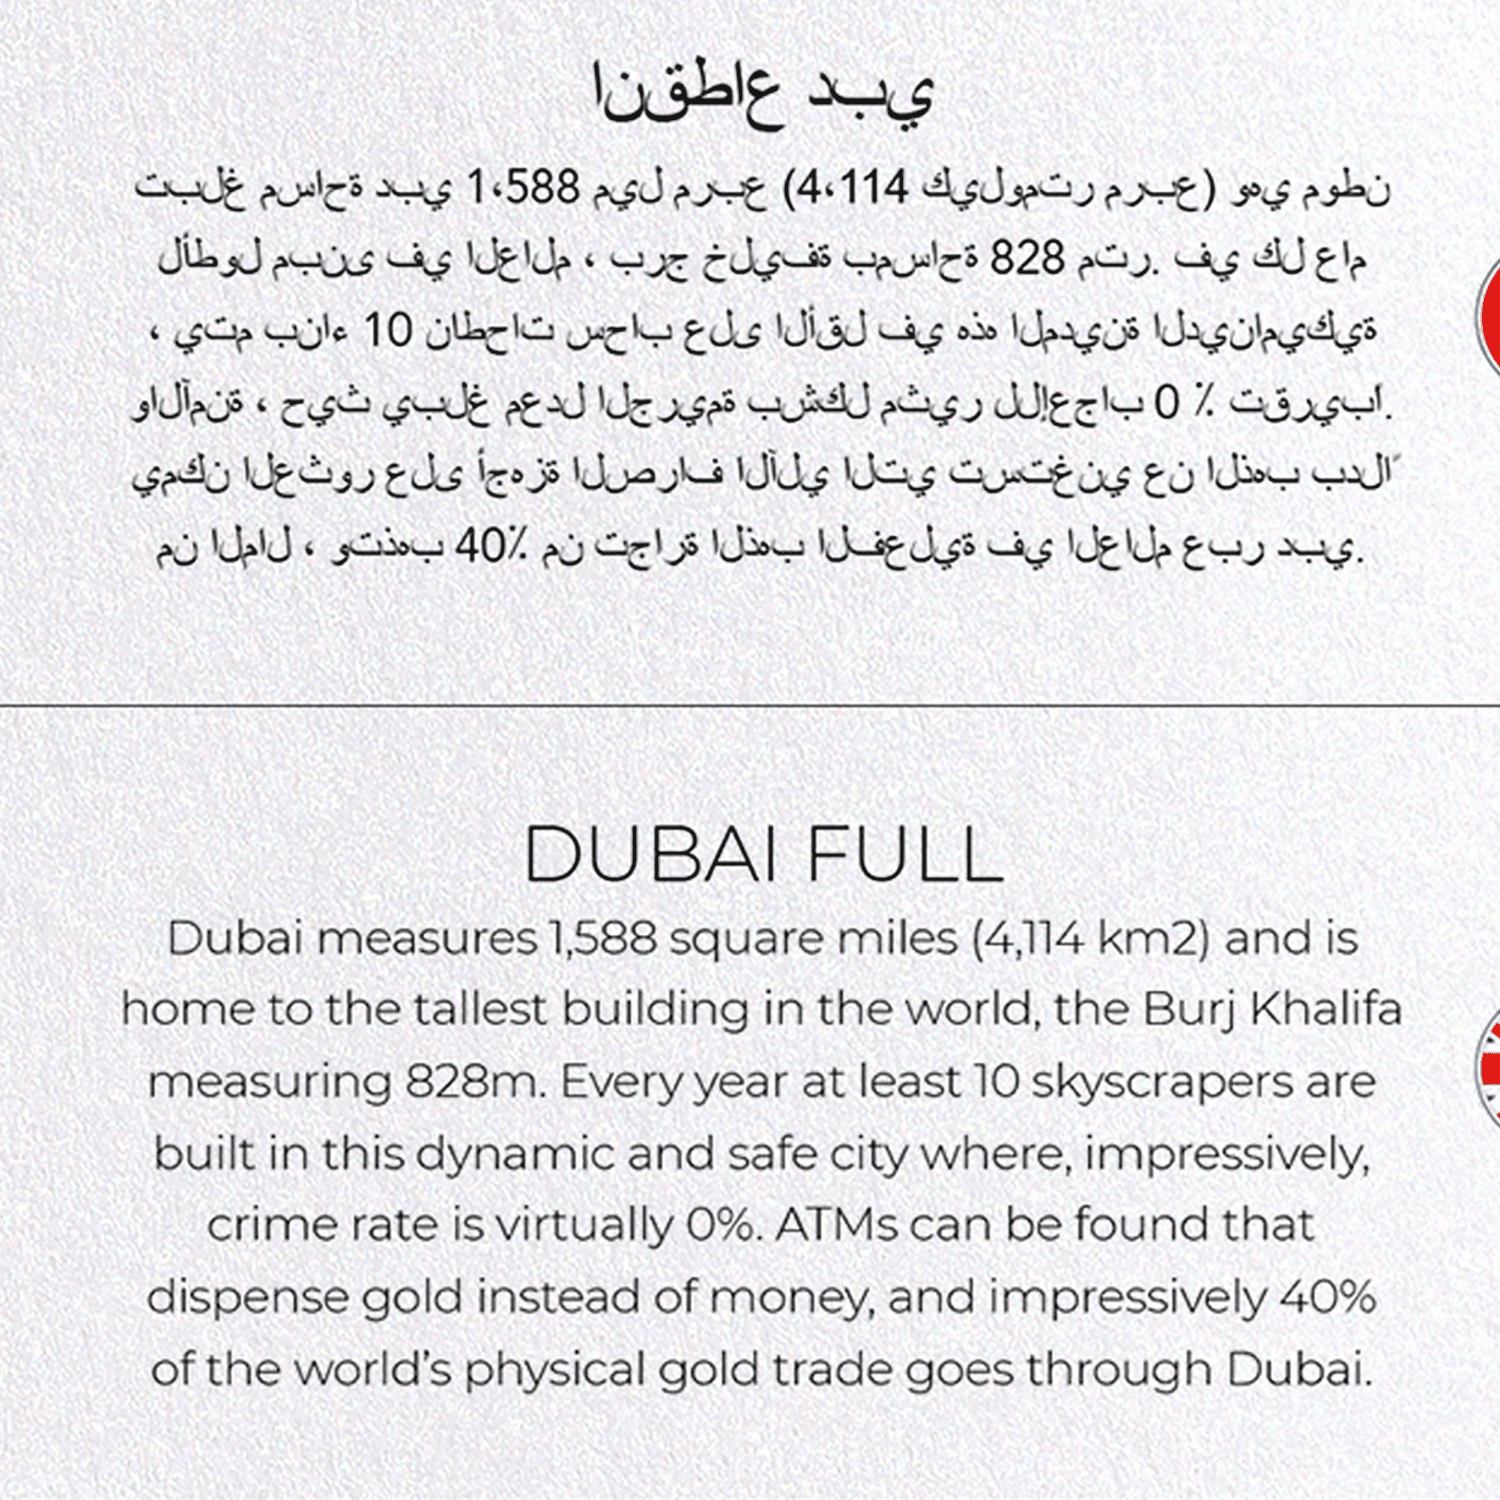 DUBAI FULL